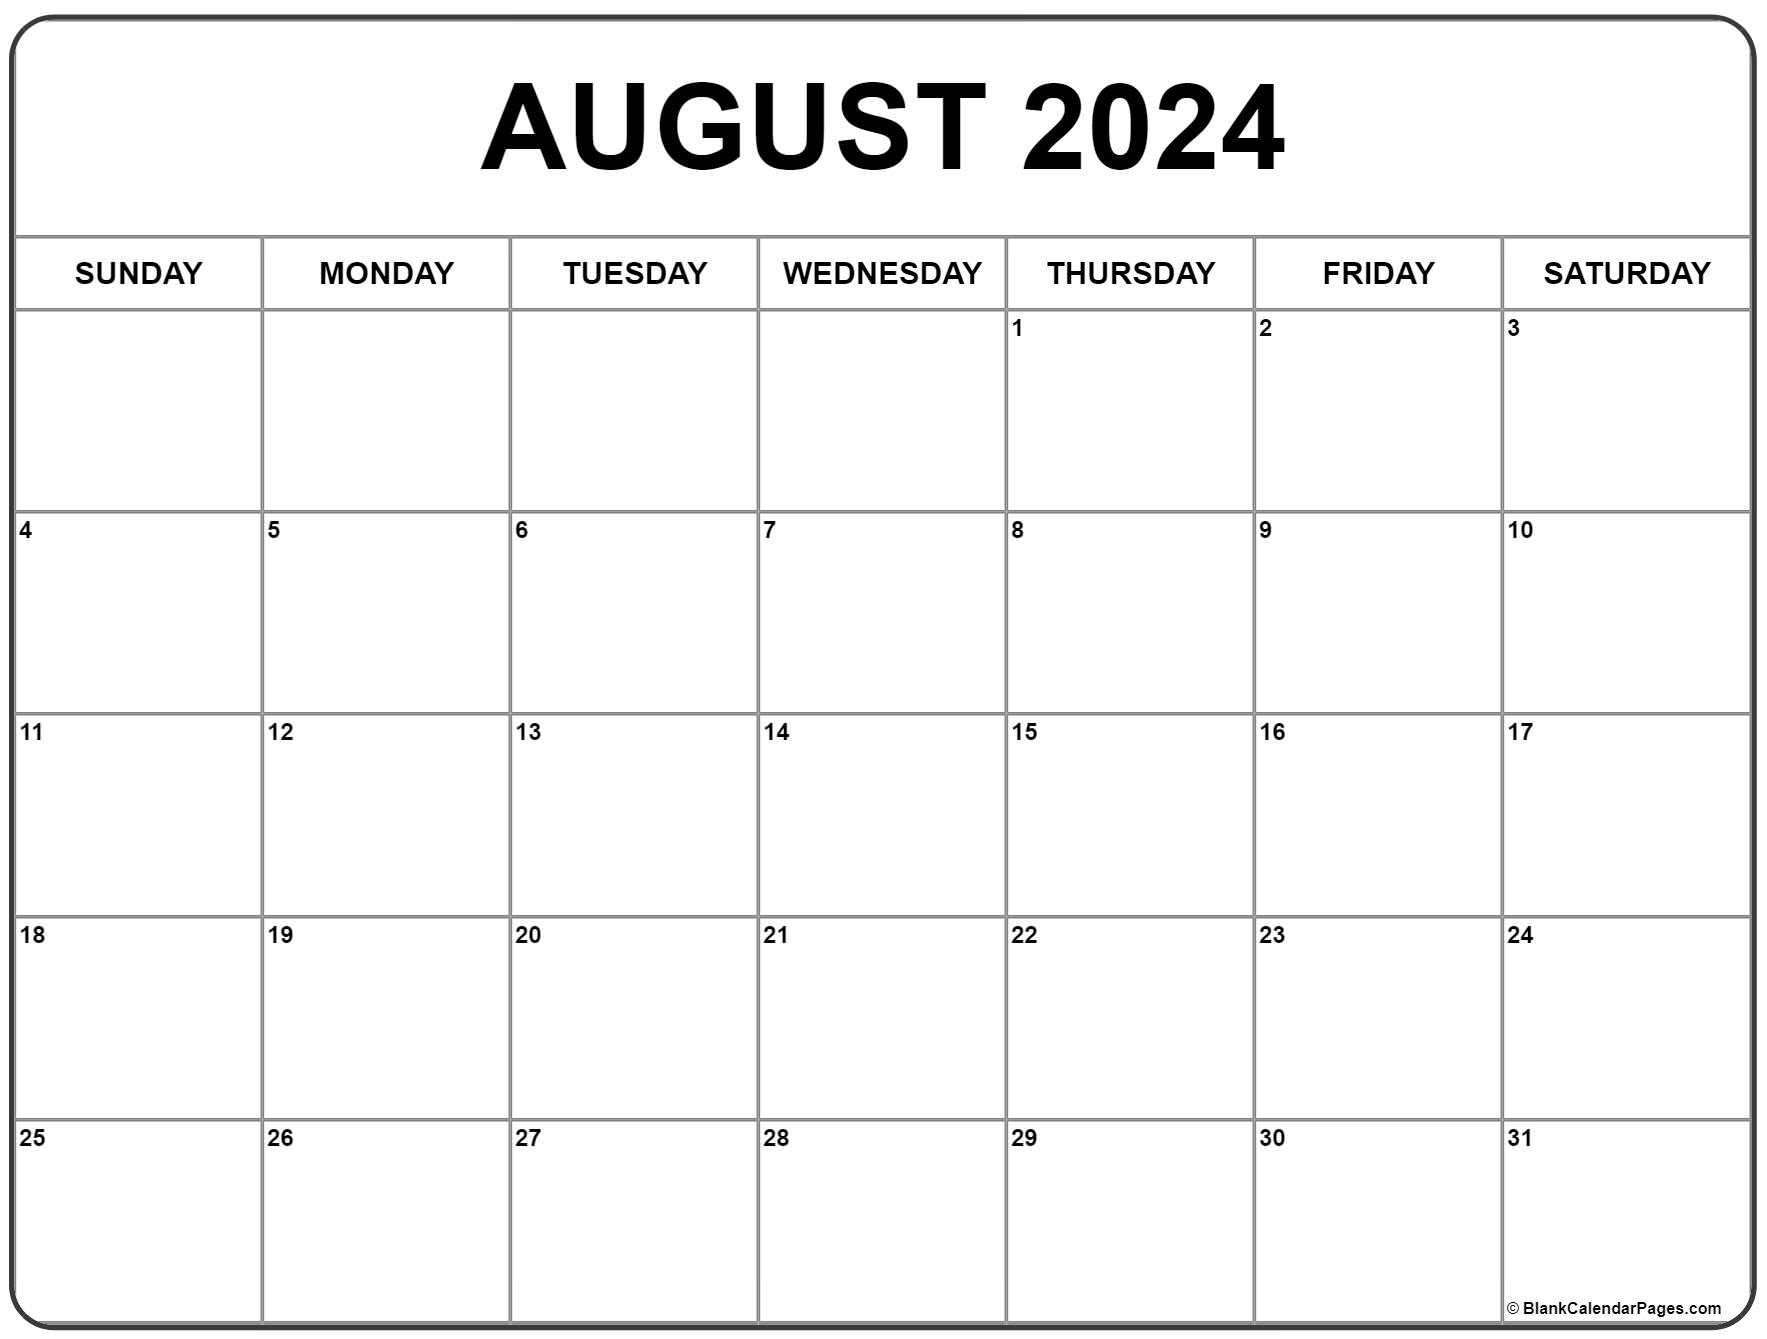 August 2024 Calendar | Free Printable Calendar for Monthly Calendar Printable August 2024